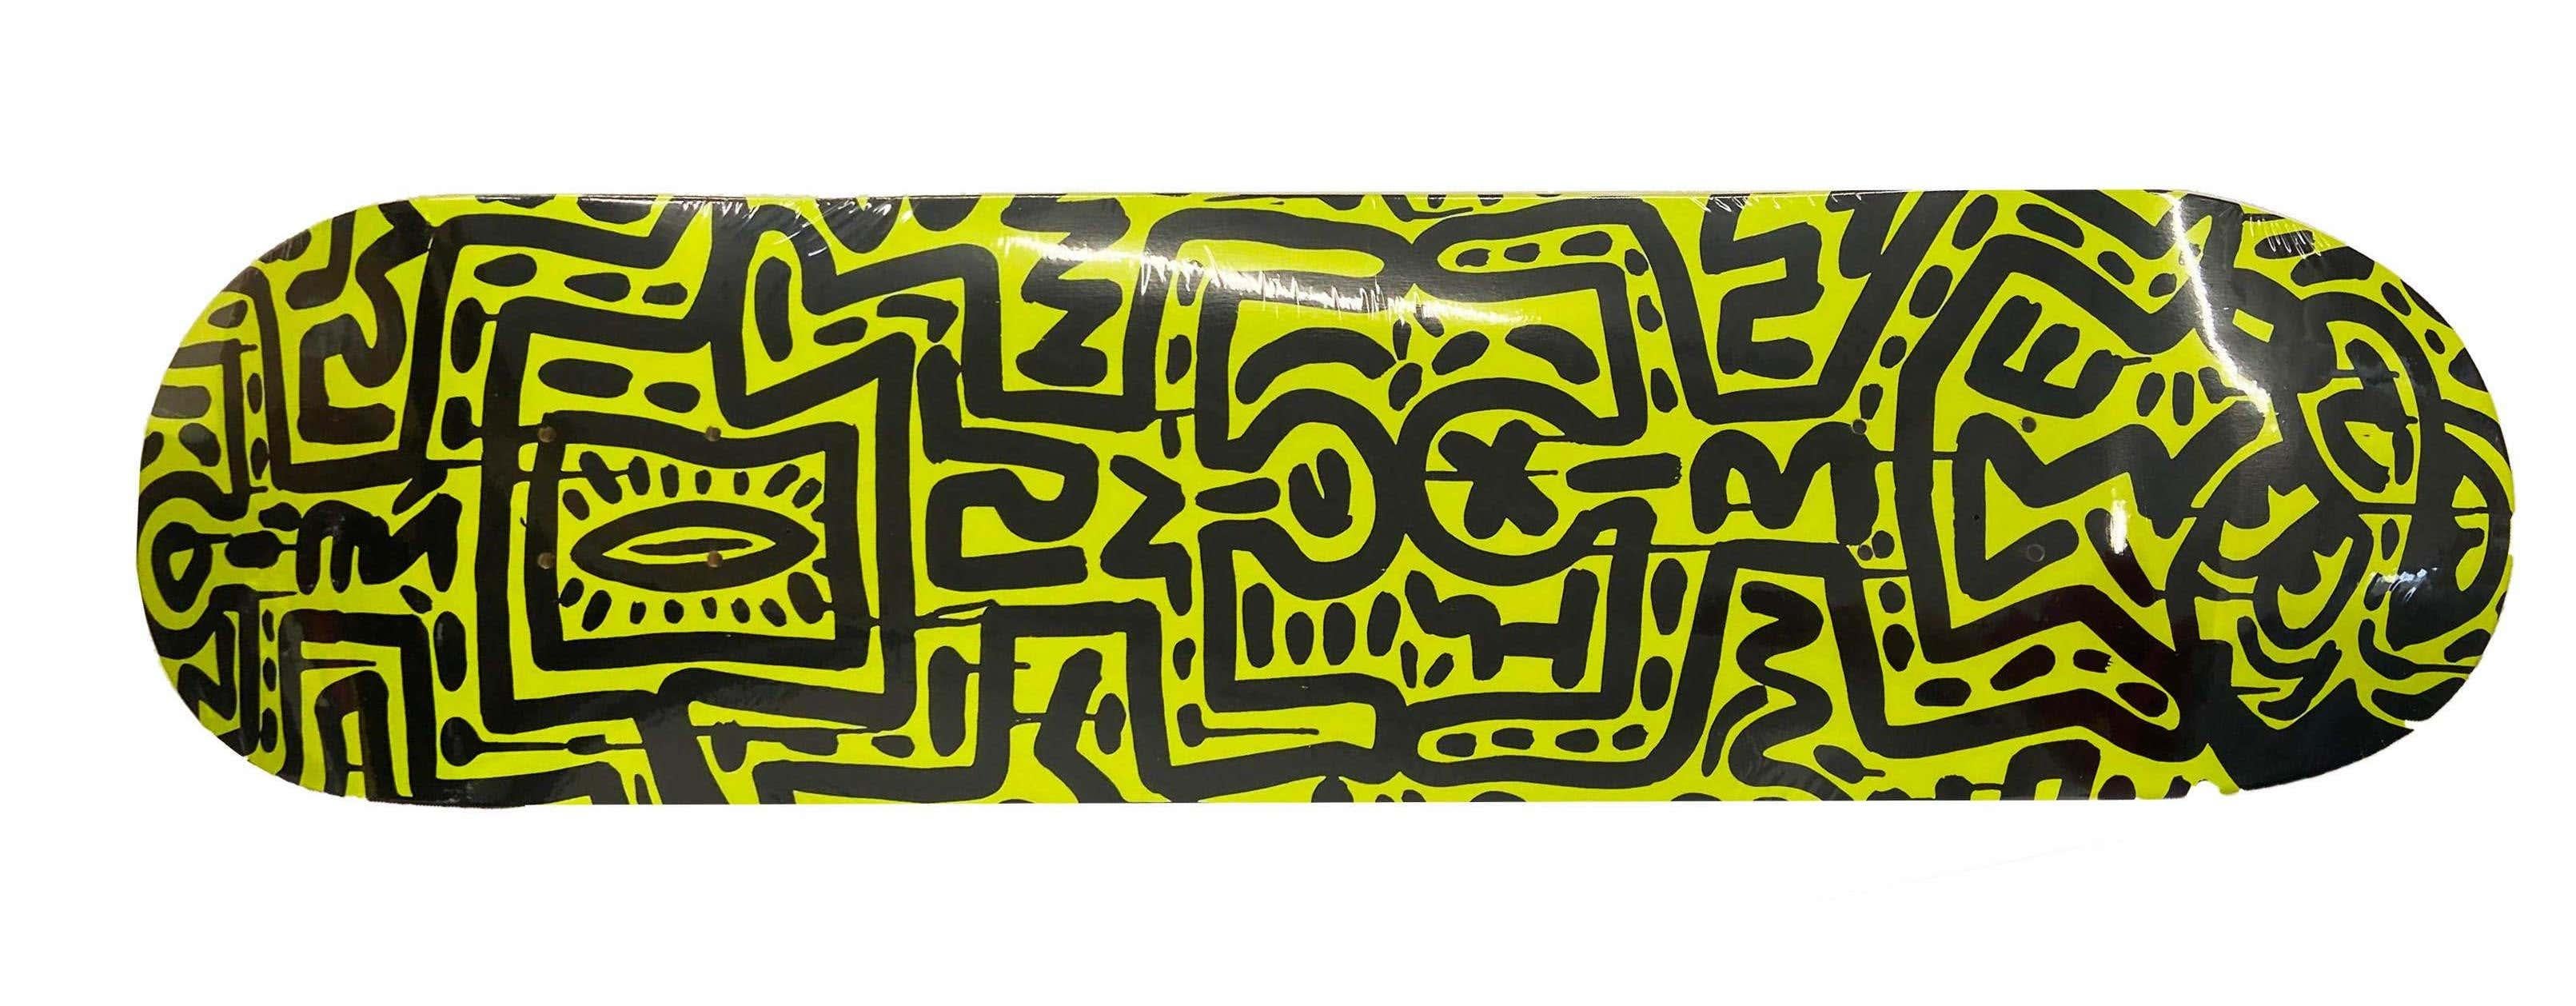 Skateboard-Deckendeck von Keith Haring (Keith Haring Mickey Mouse) im Angebot 1